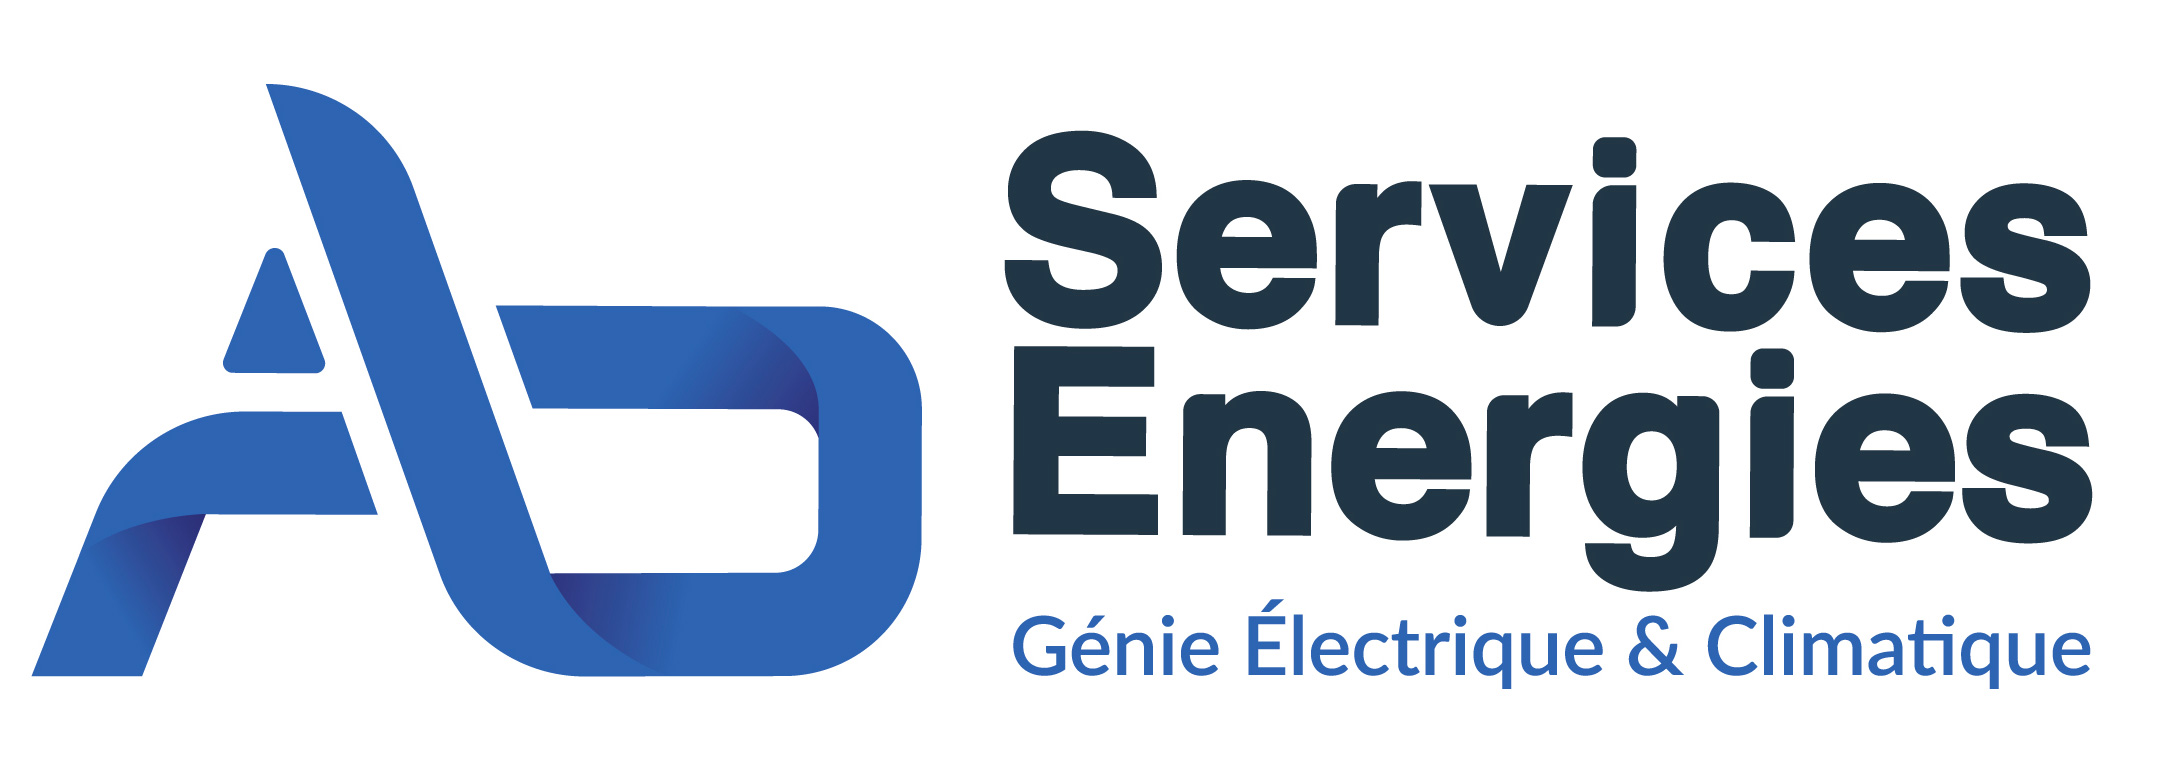 Logo AB Services Energies